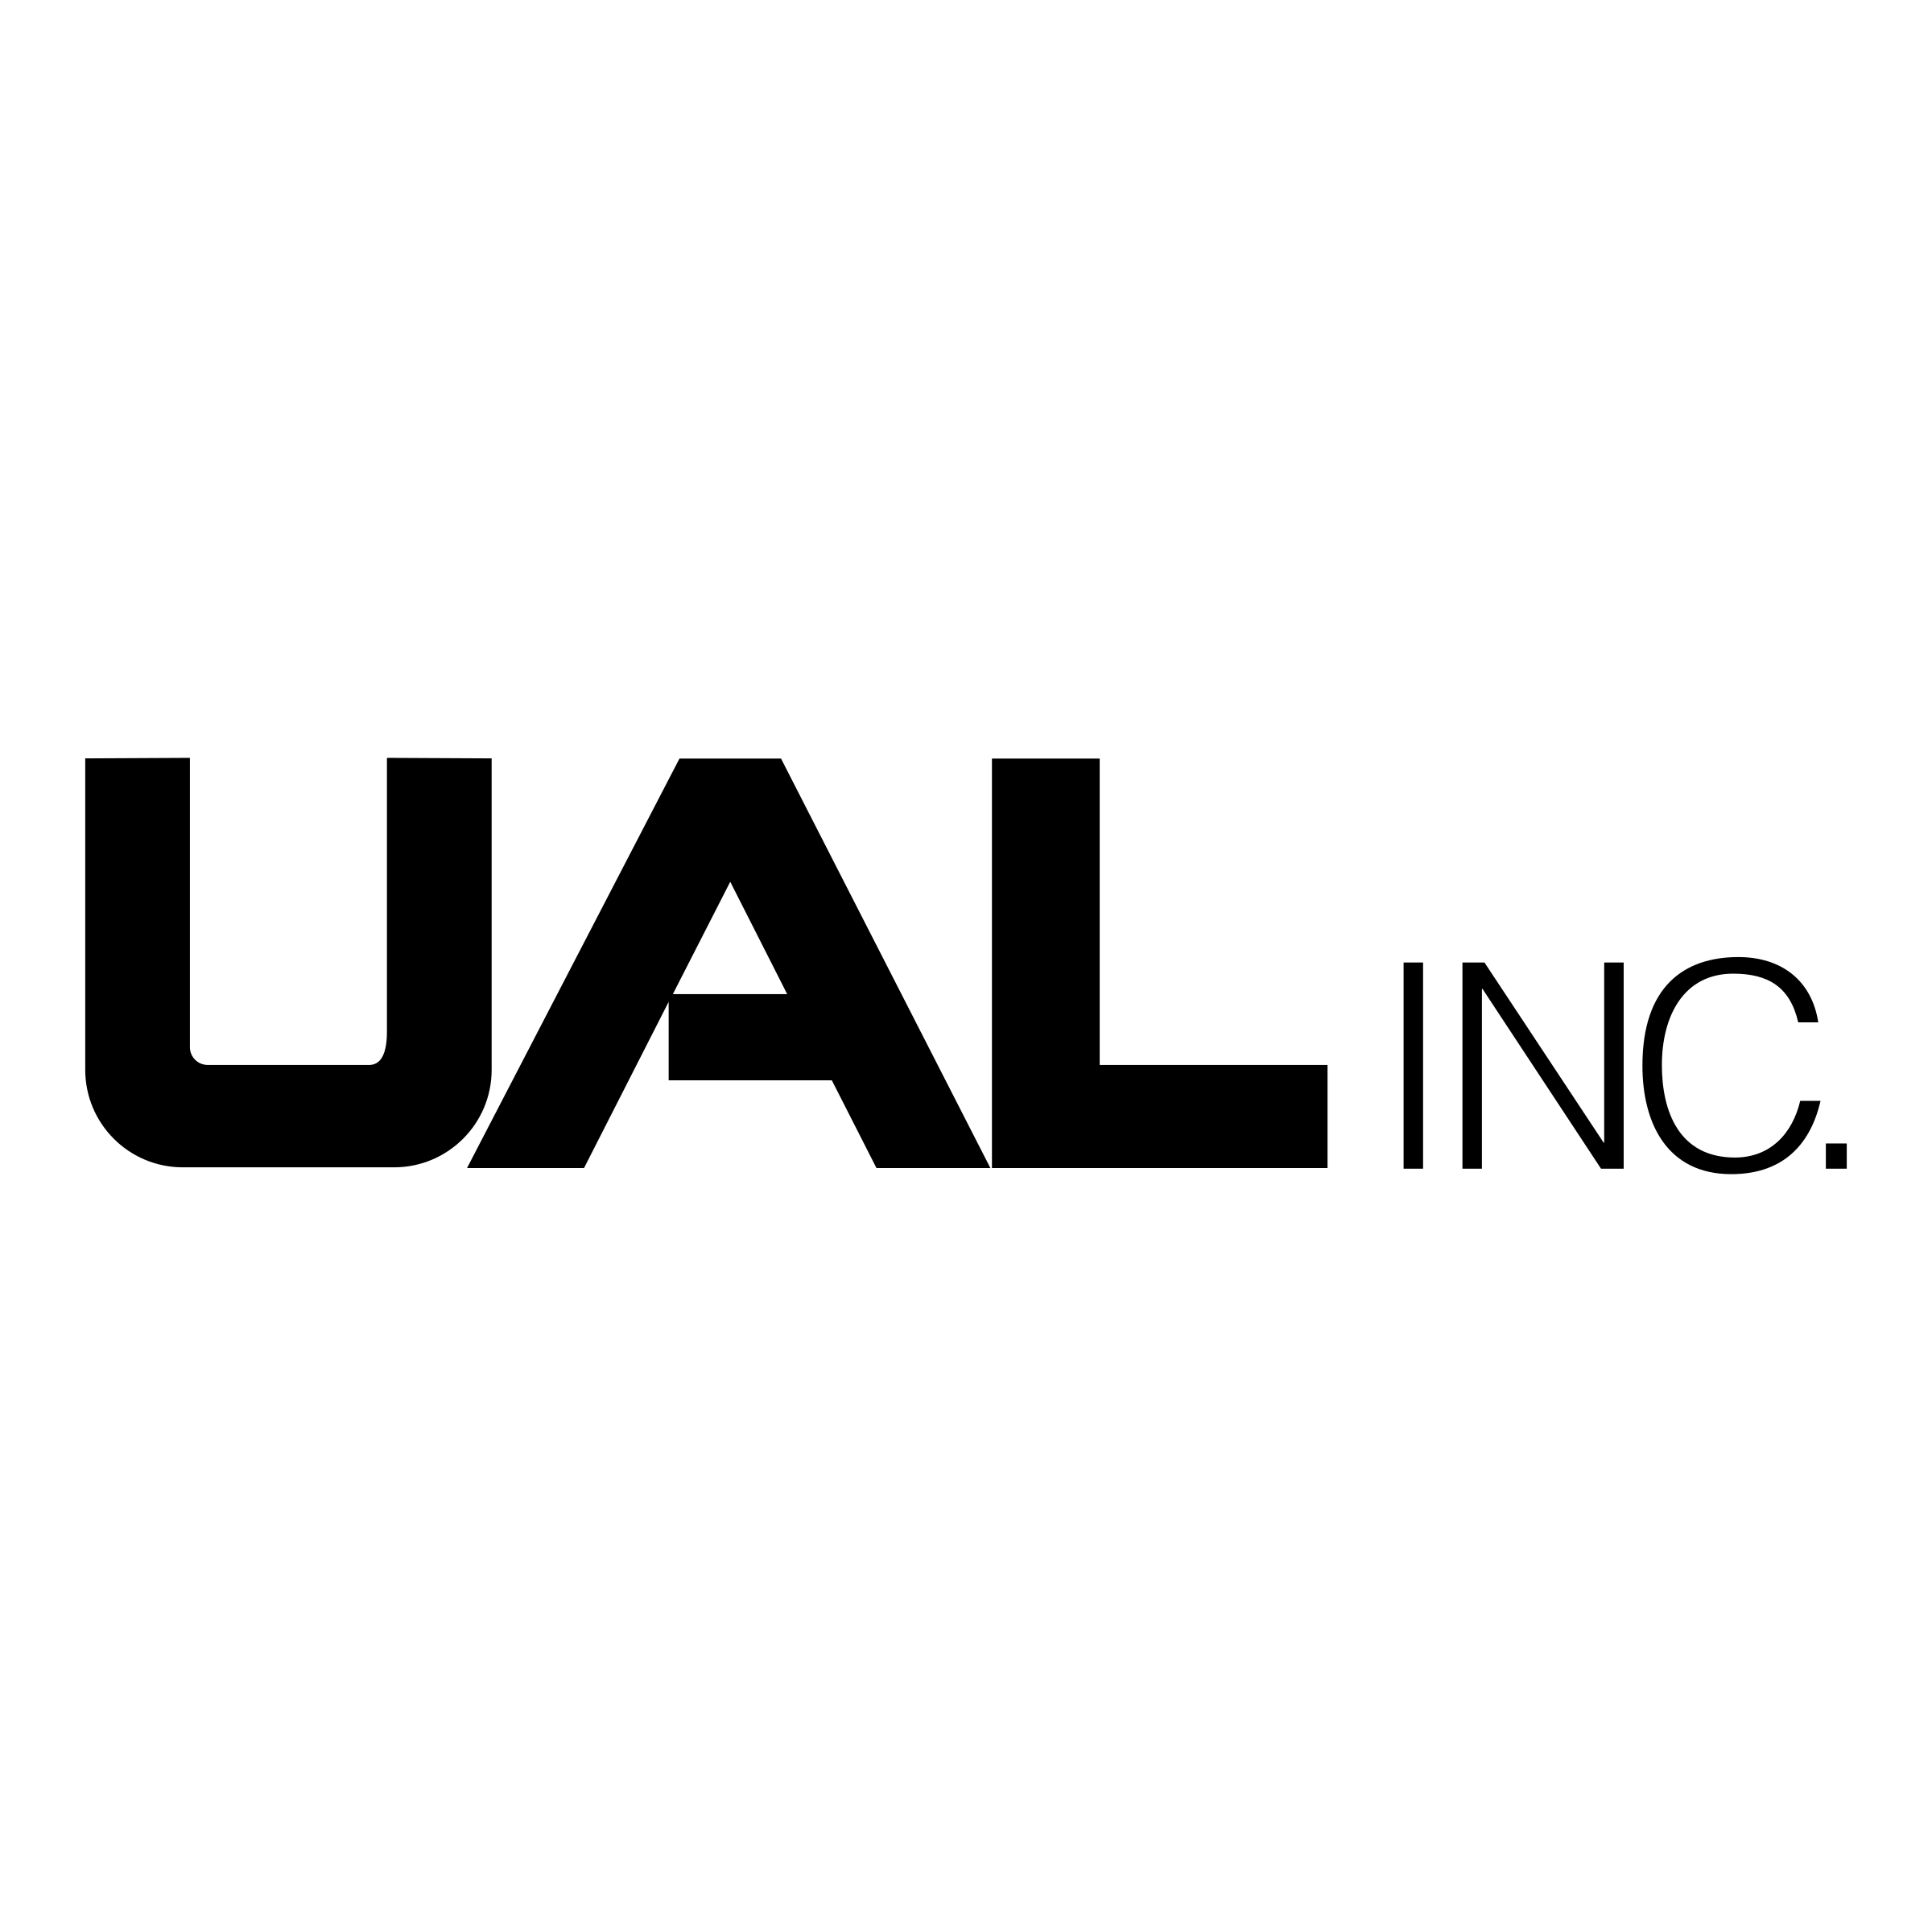 Ual Logo - UAL Logo PNG Transparent & SVG Vector - Freebie Supply